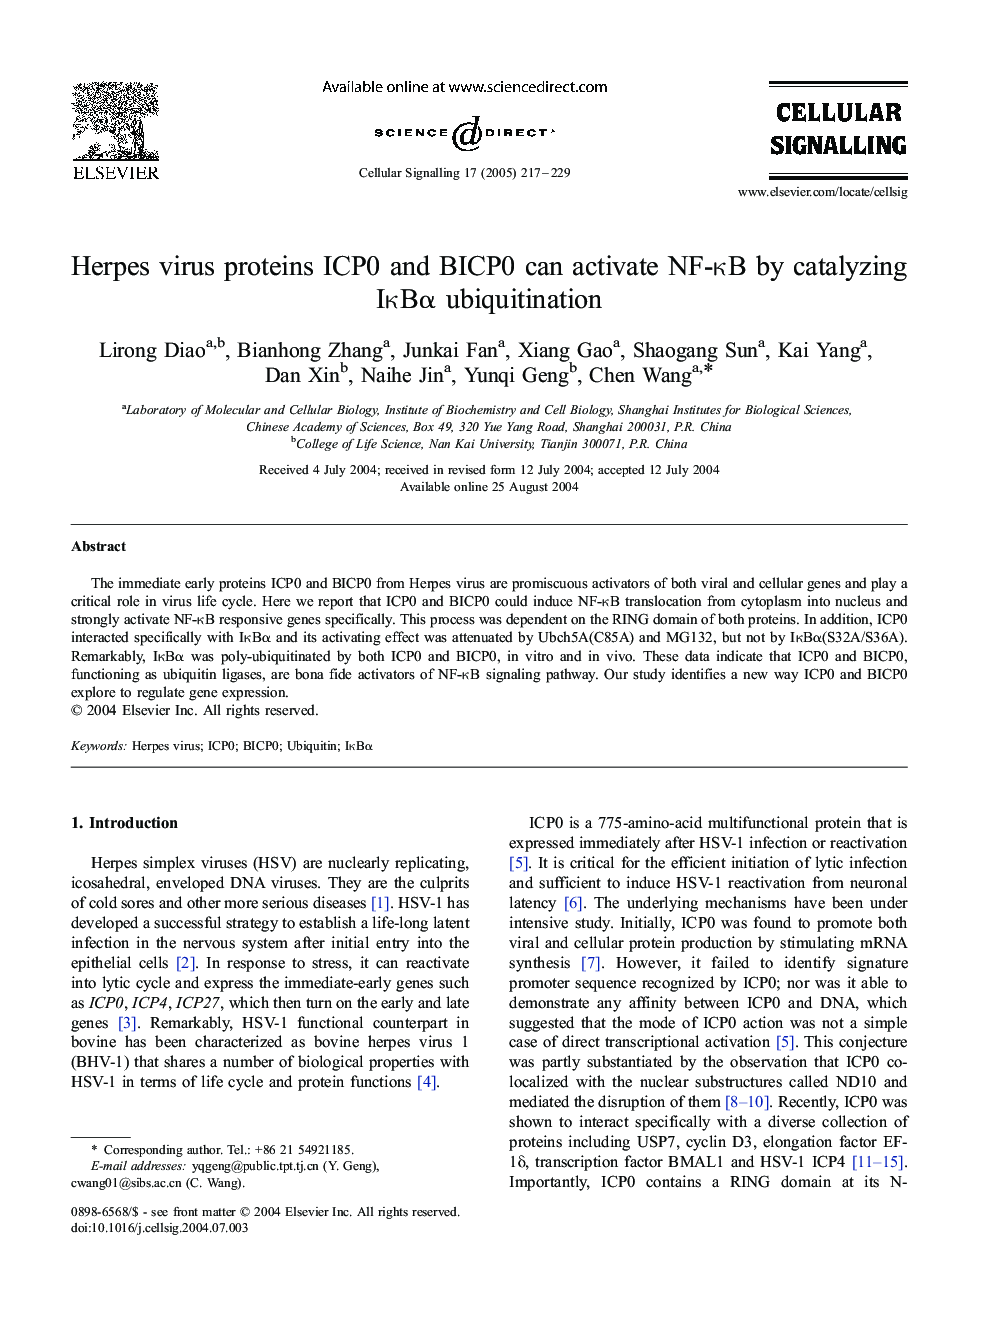 Herpes virus proteins ICP0 and BICP0 can activate NF-ÎºB by catalyzing IÎºBÎ± ubiquitination